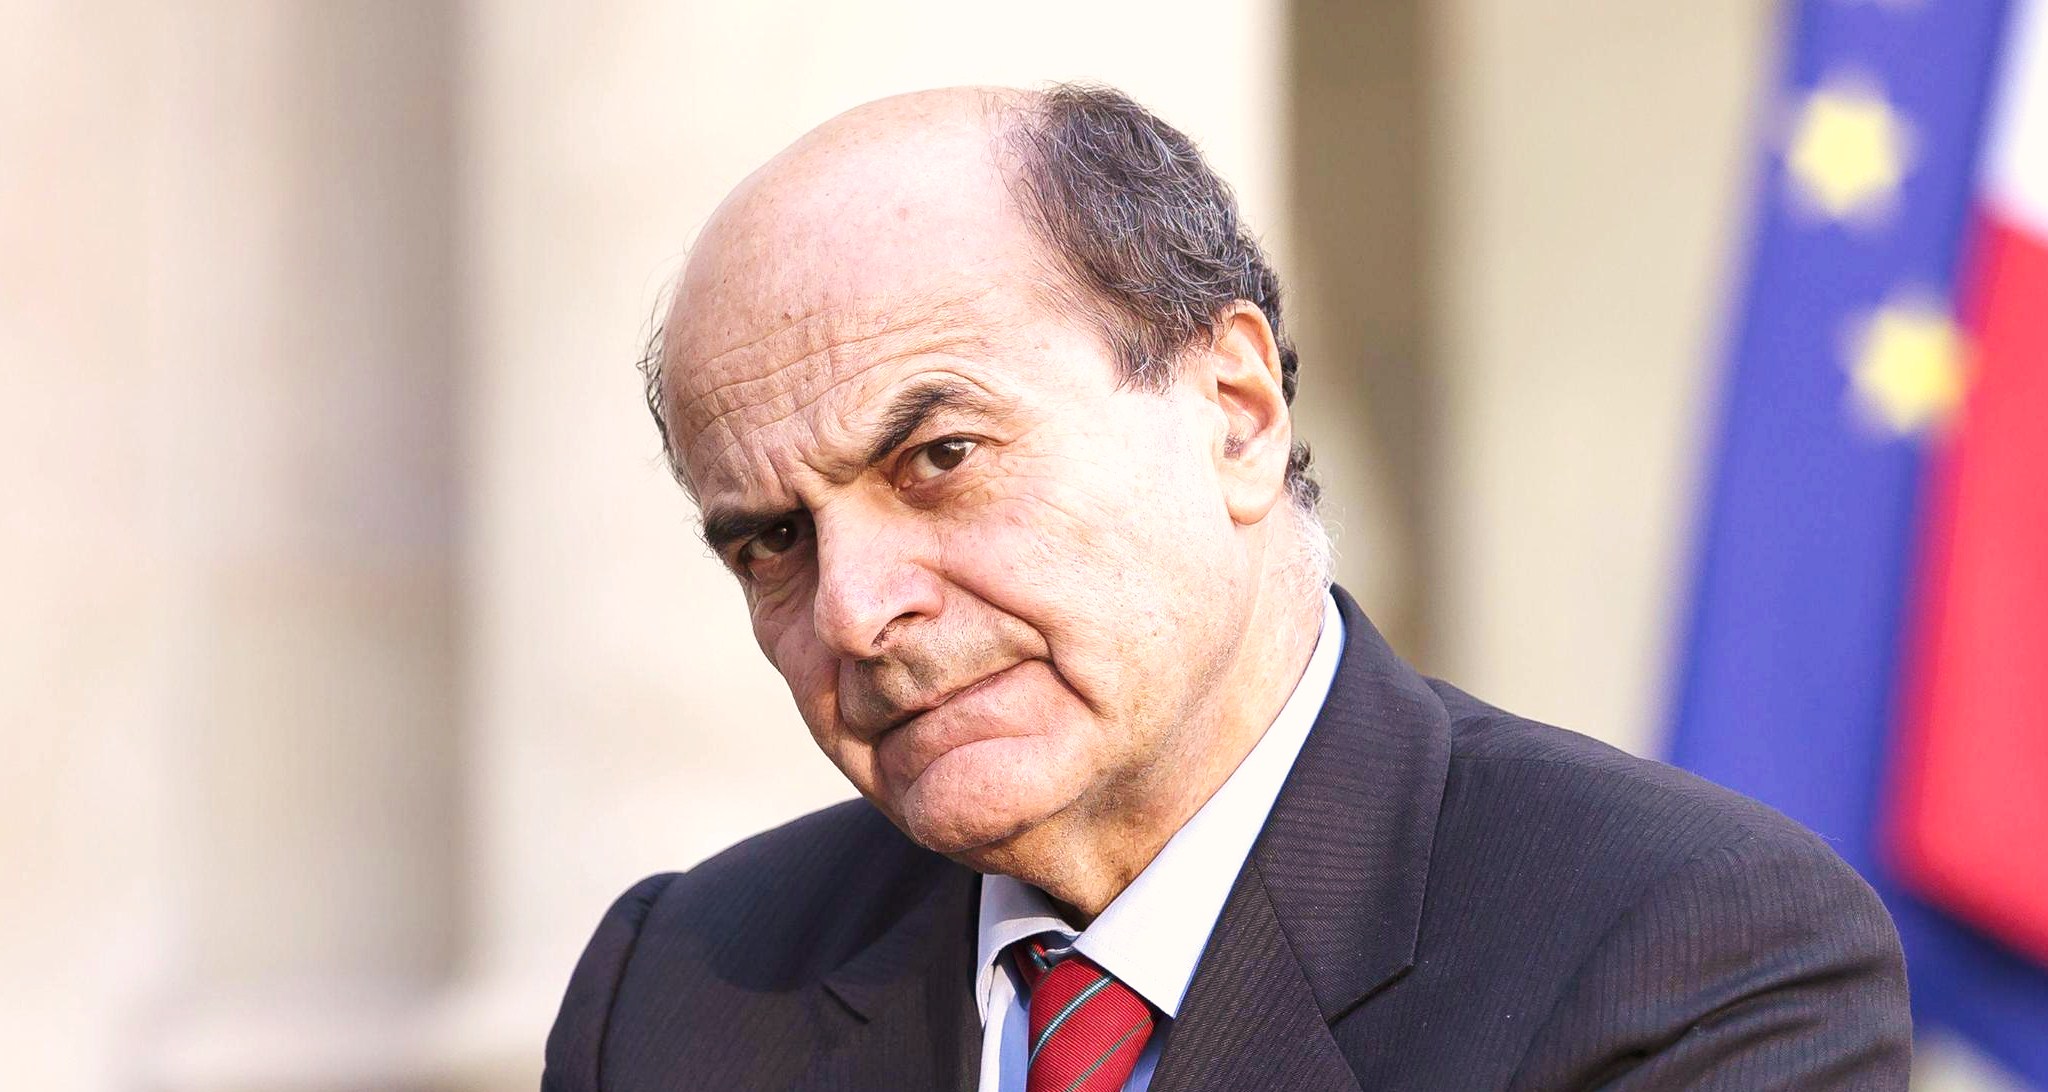 Bersani affila le armi: “Renzi fa pressioni indebite”